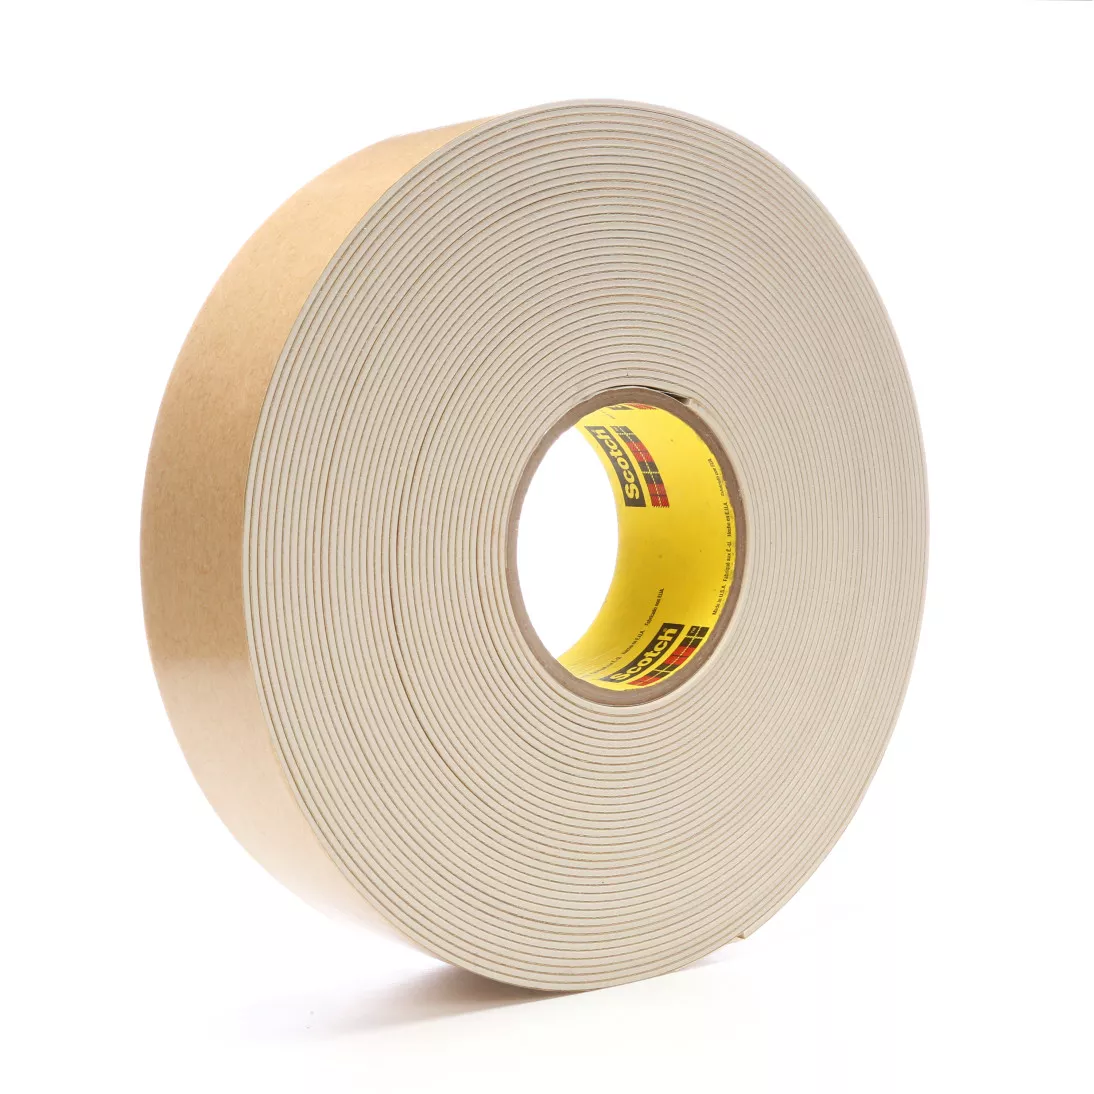 3M™ Impact Stripping Tape 528, Tan, 2 in x 20 yd, 82 mil, 6 rolls per
case